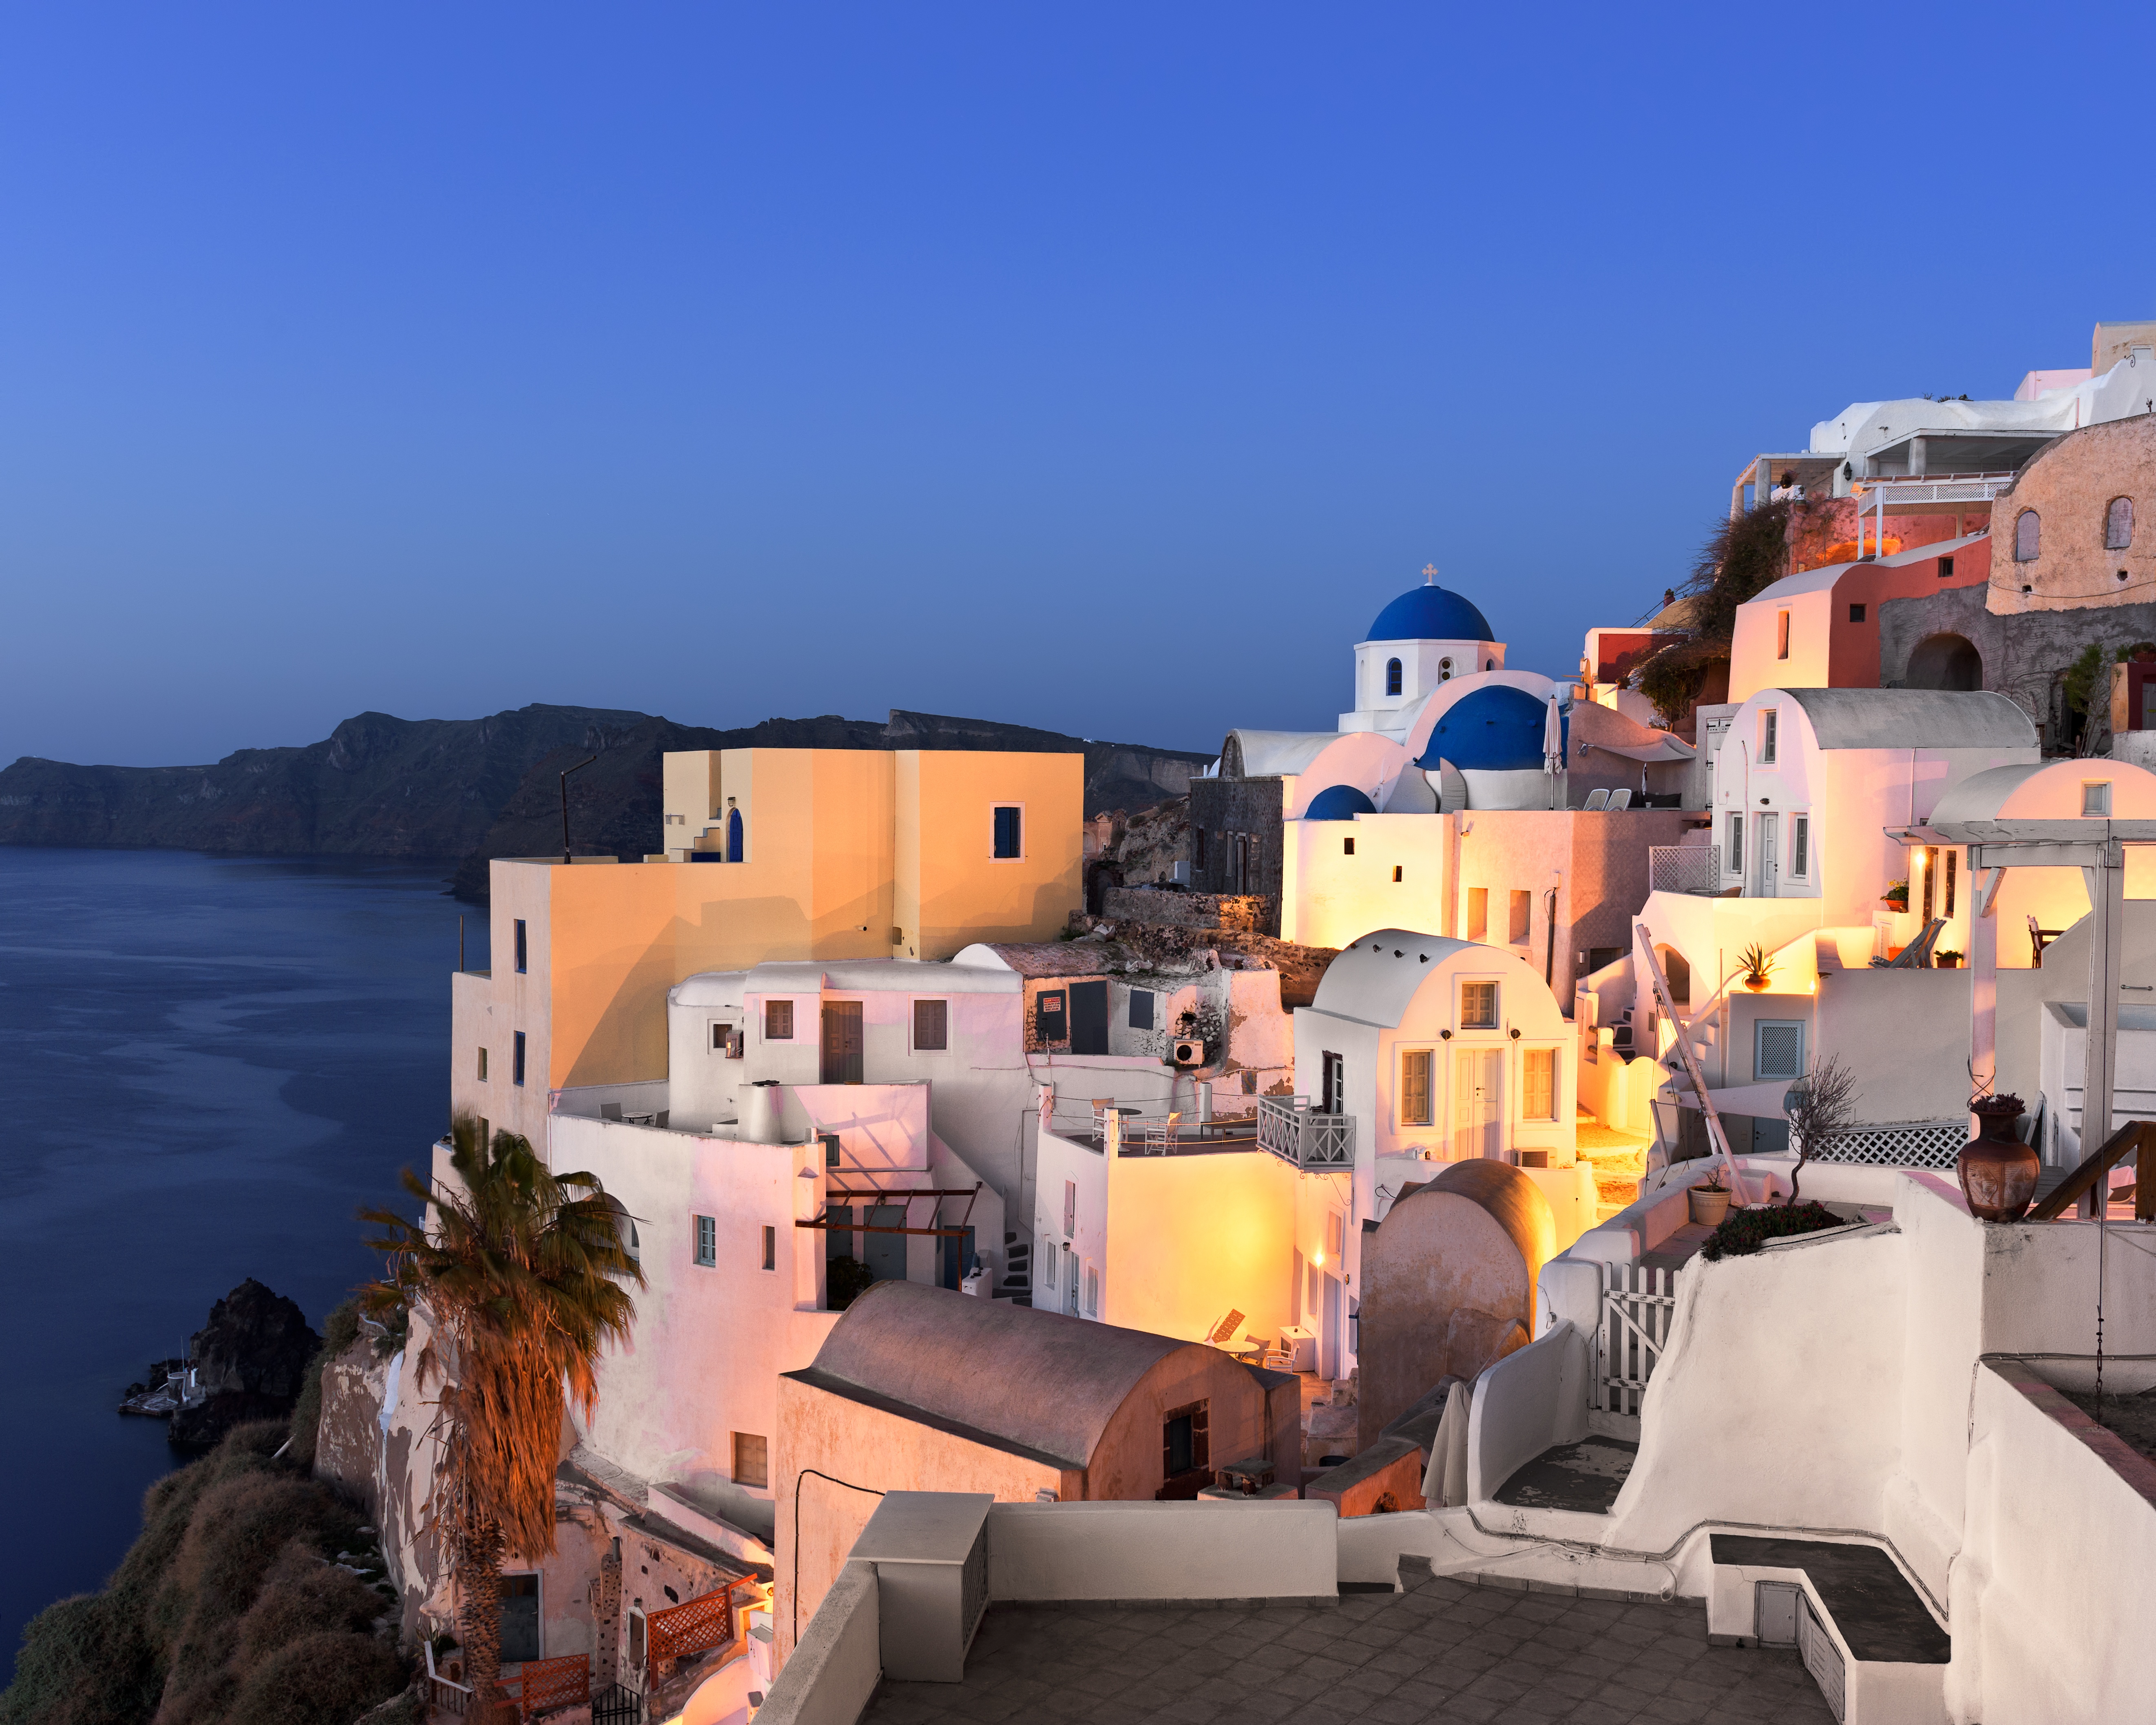 Santorini, Greece/ Courtesy of Shutterstock